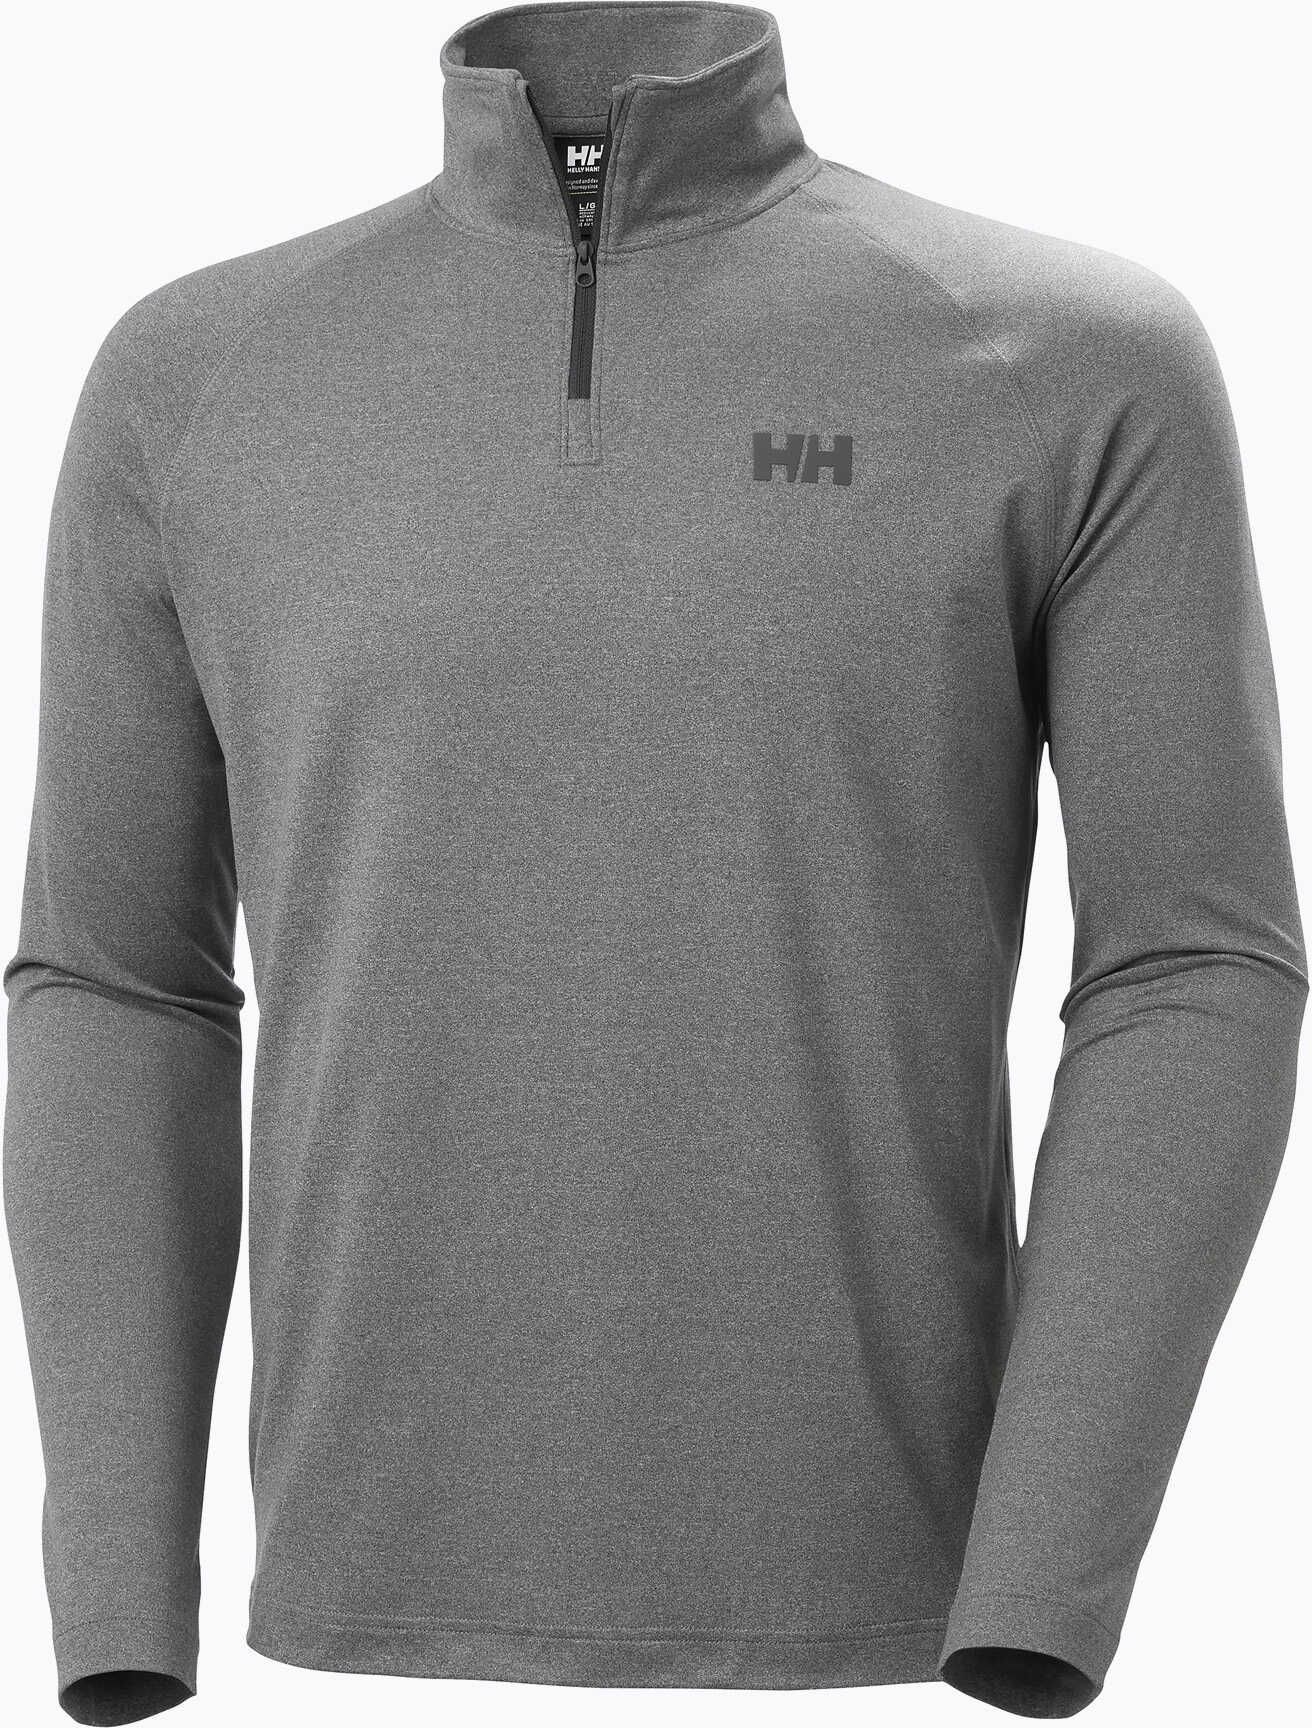 Bluza trekkingowa męska Helly Hansen Verglas 1/2 Zip 980 szara 62947 WYSYŁKA W 24H 30 DNI NA ZWROT